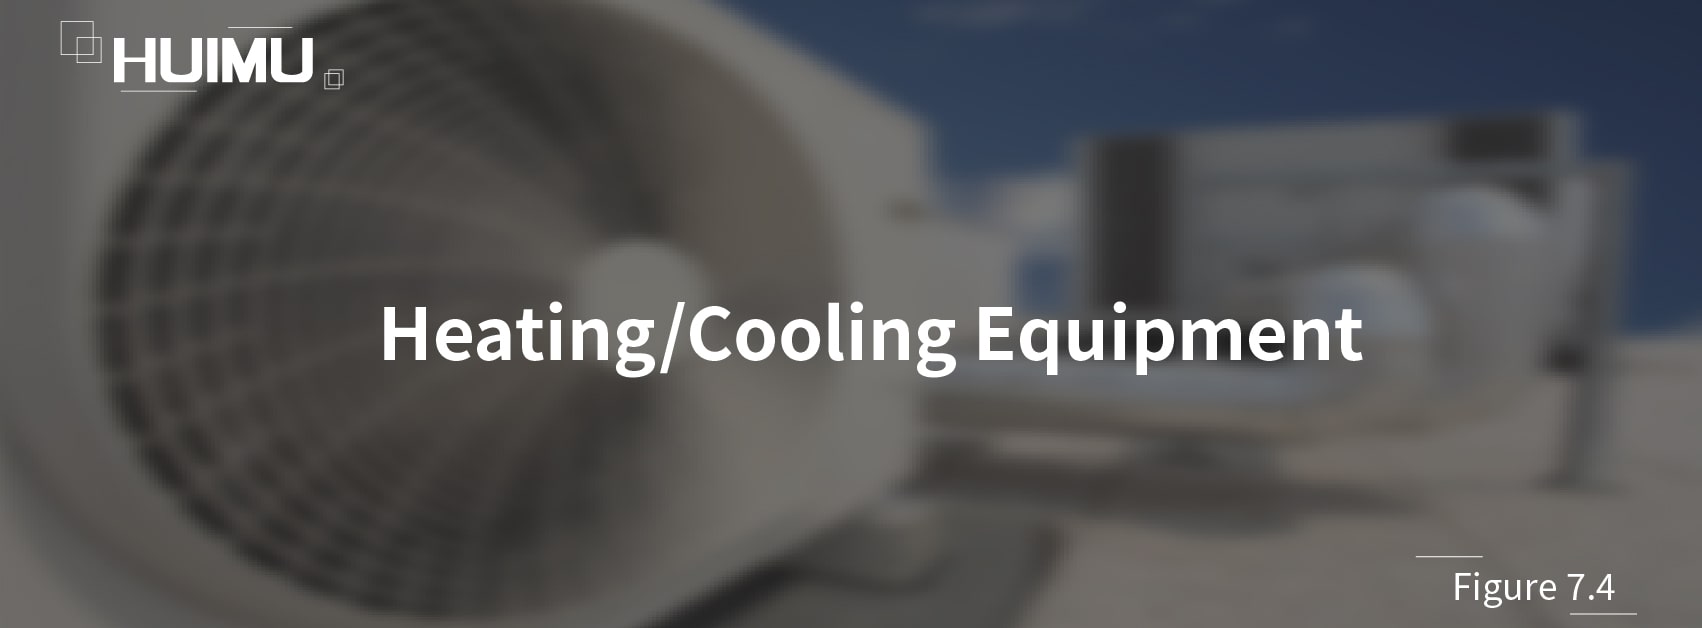 Heating/Cooling Equipment